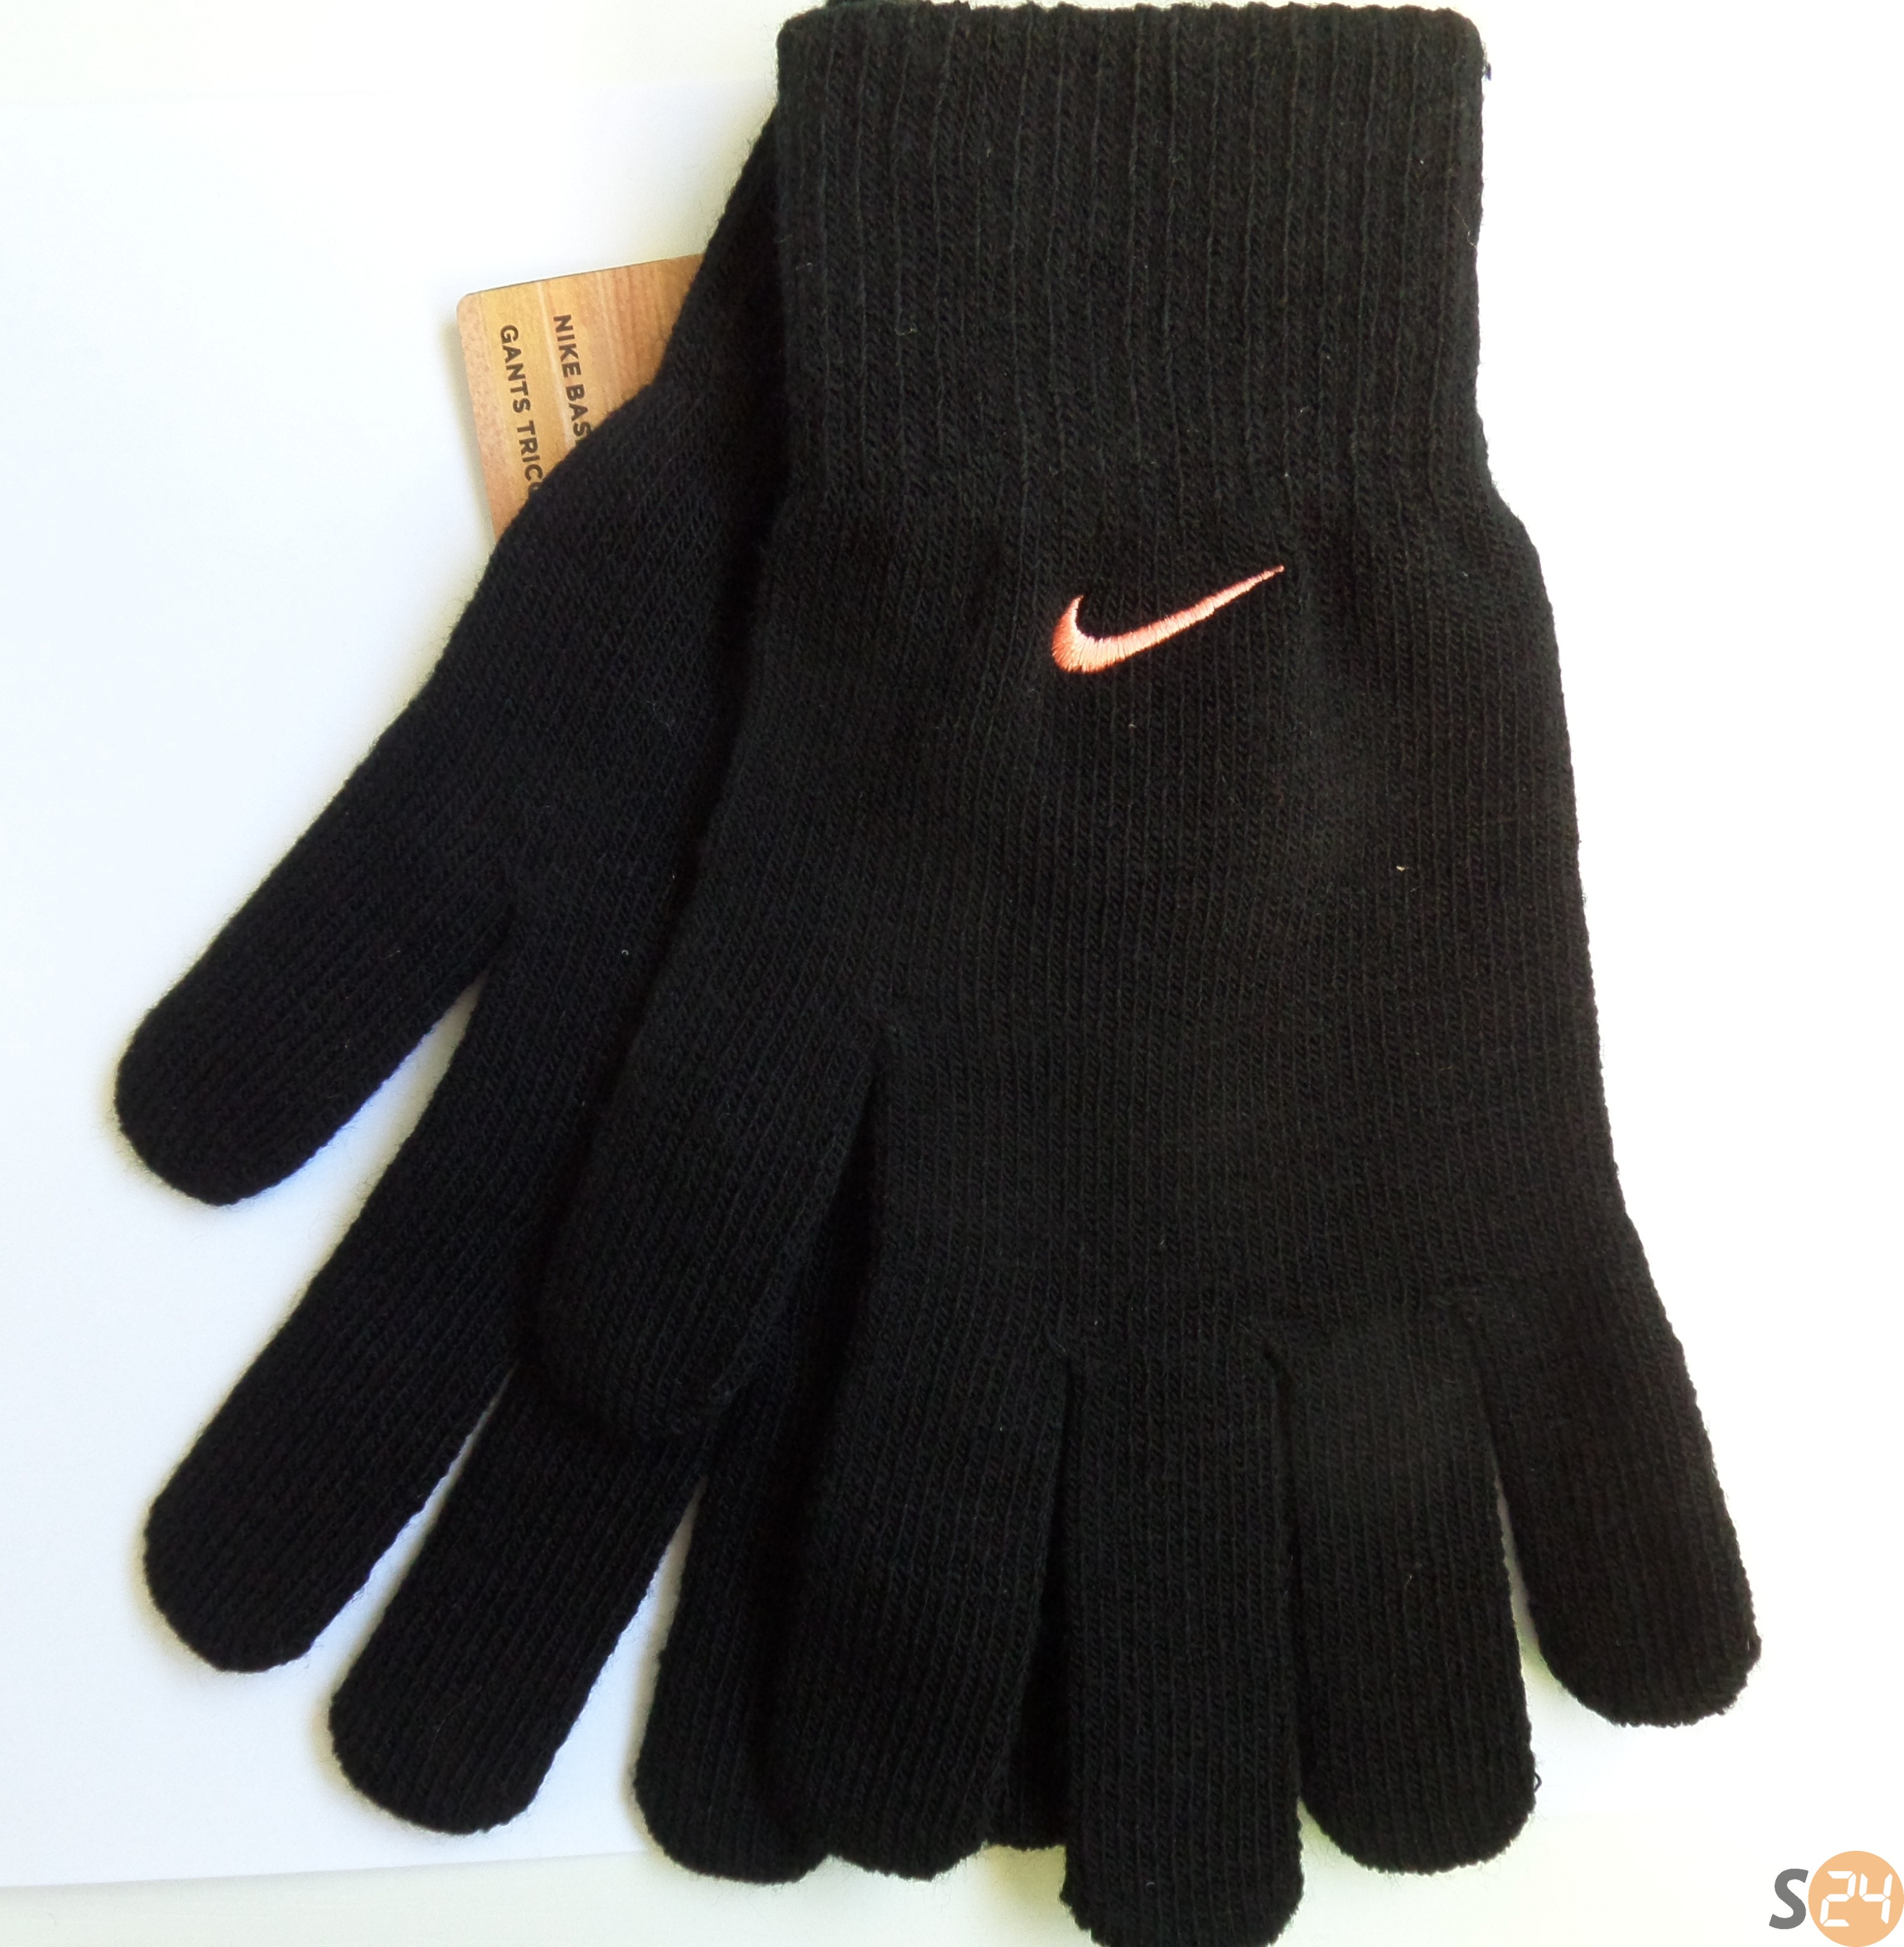 Nike eq Sapka, Sál, Kesztyű Knitted gloves s/m NWG09066SM